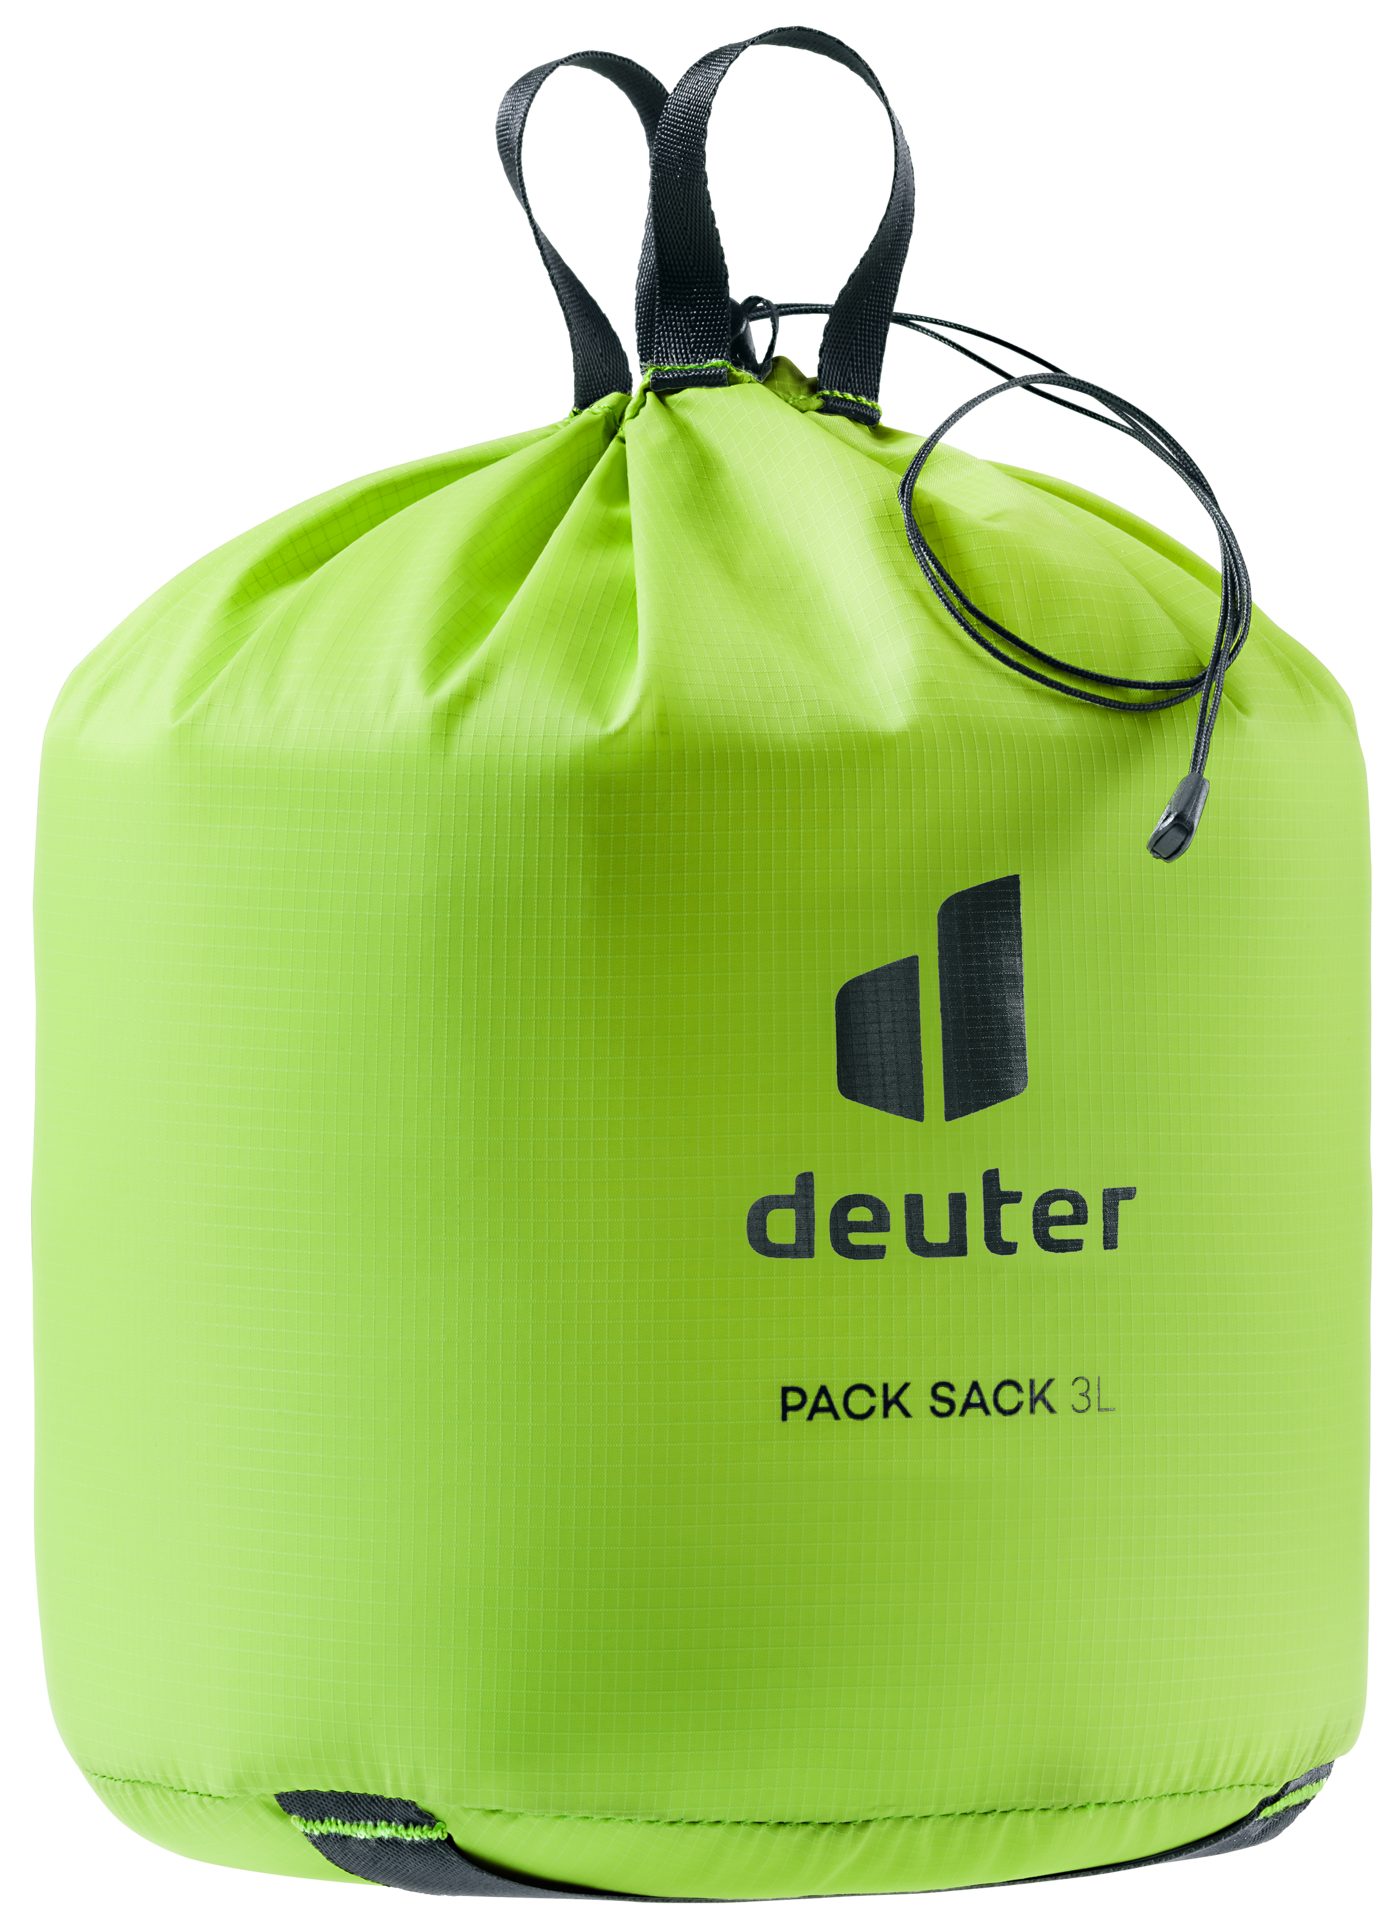 deuter Packsack Pack Sack 3